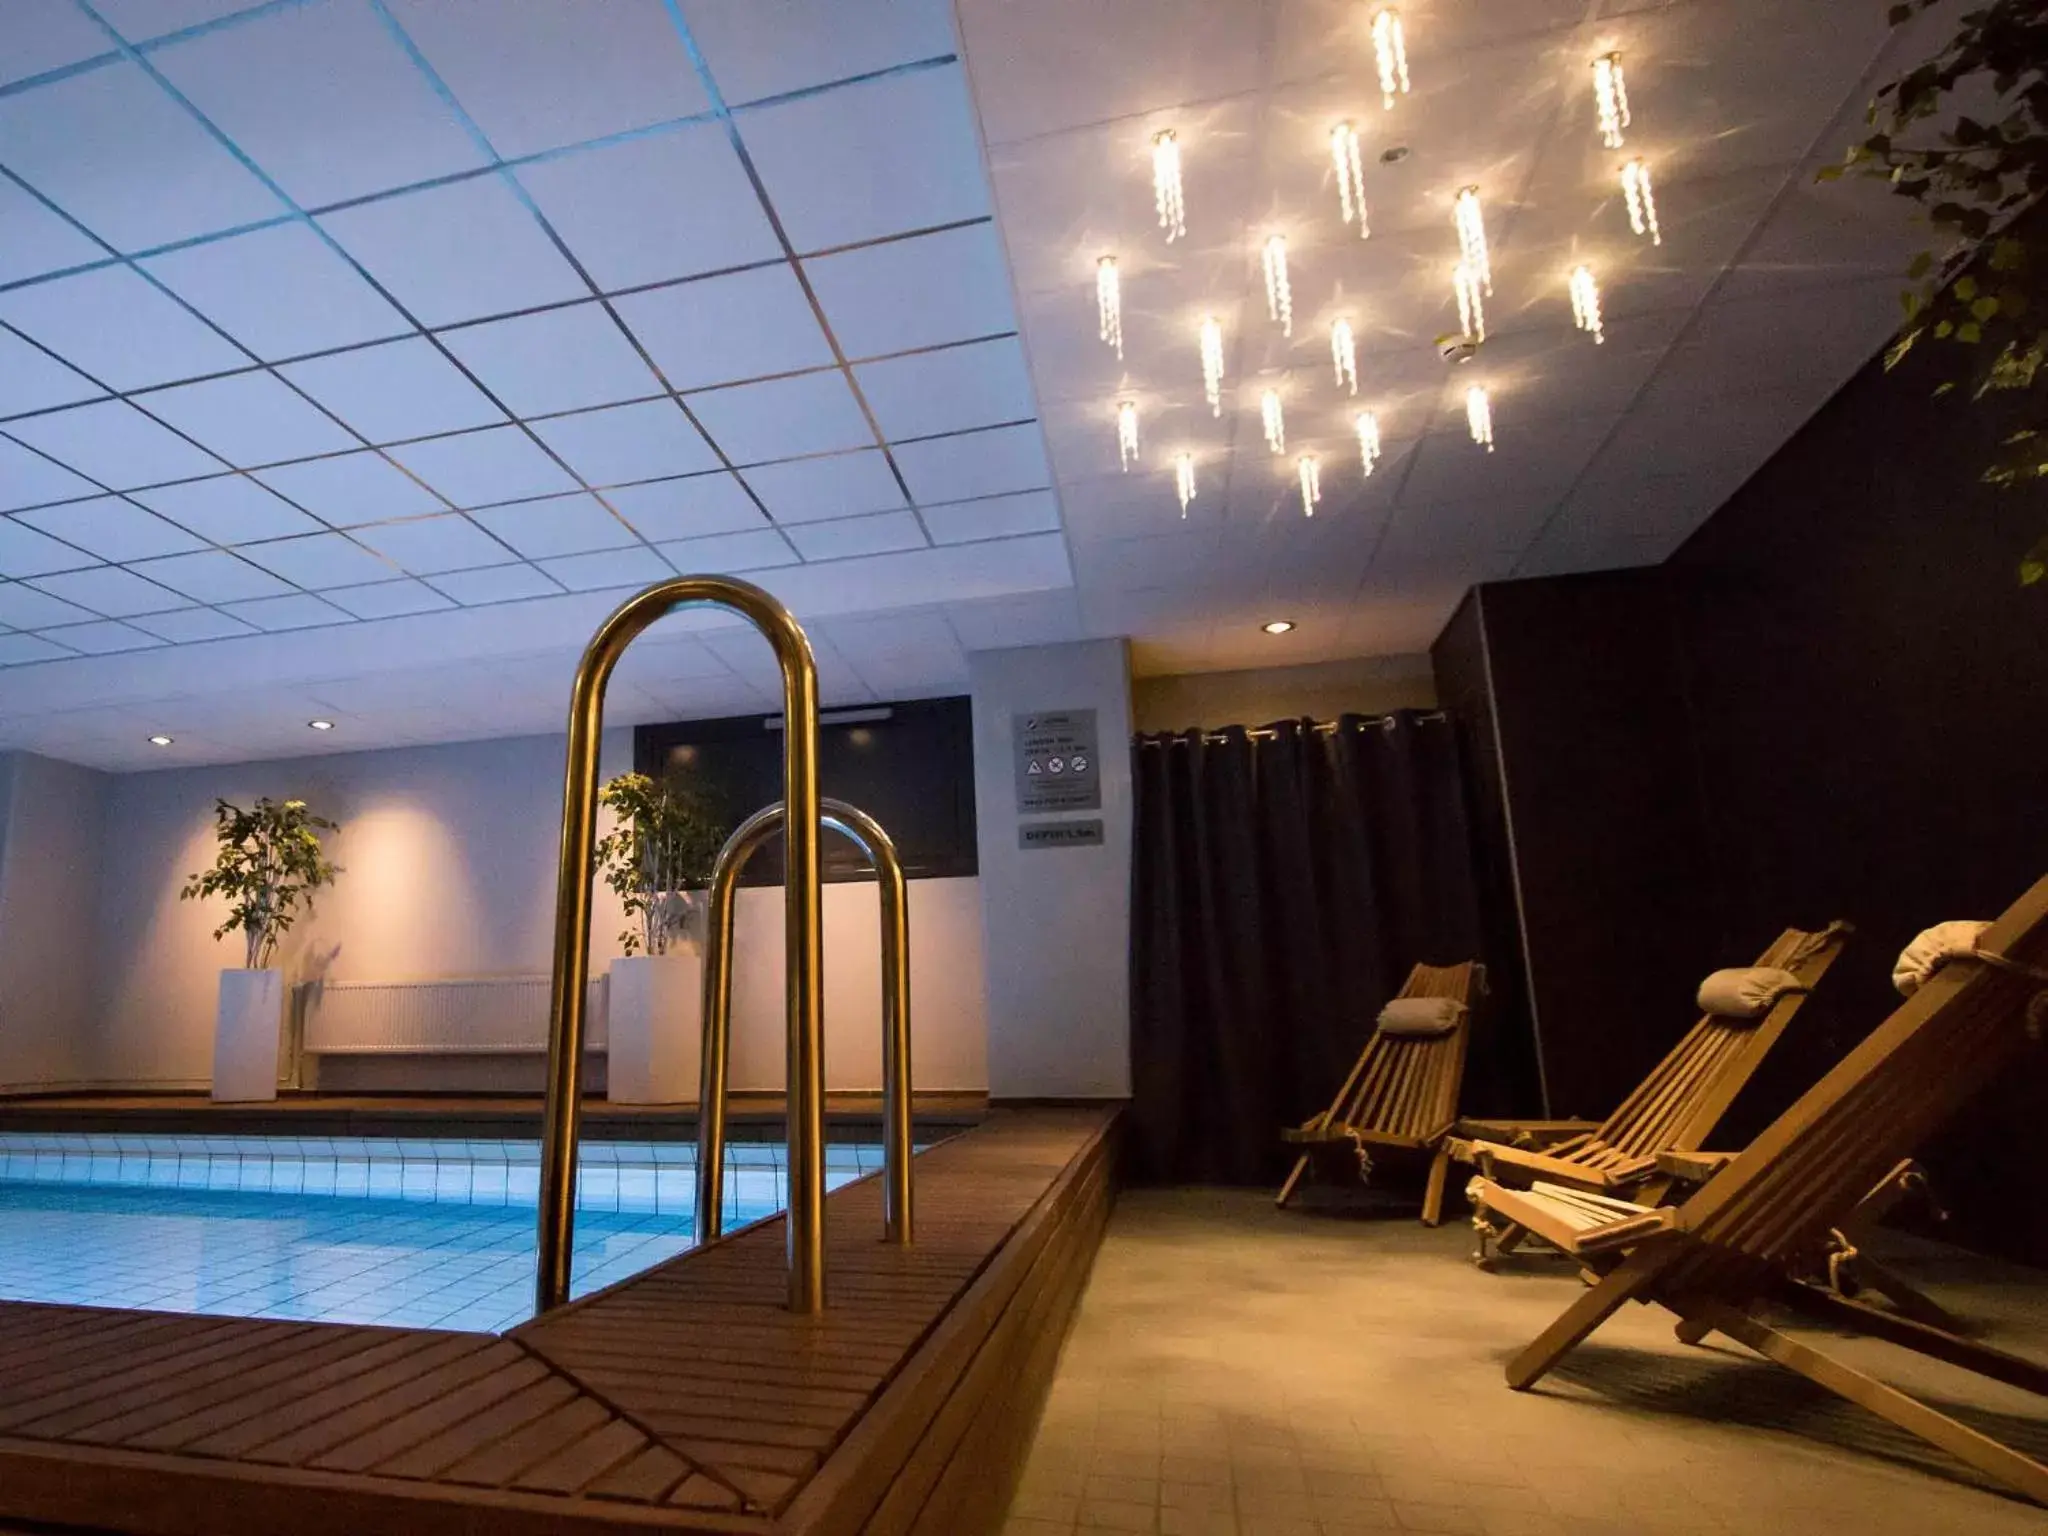 Activities, Swimming Pool in Original Sokos Hotel Lappee